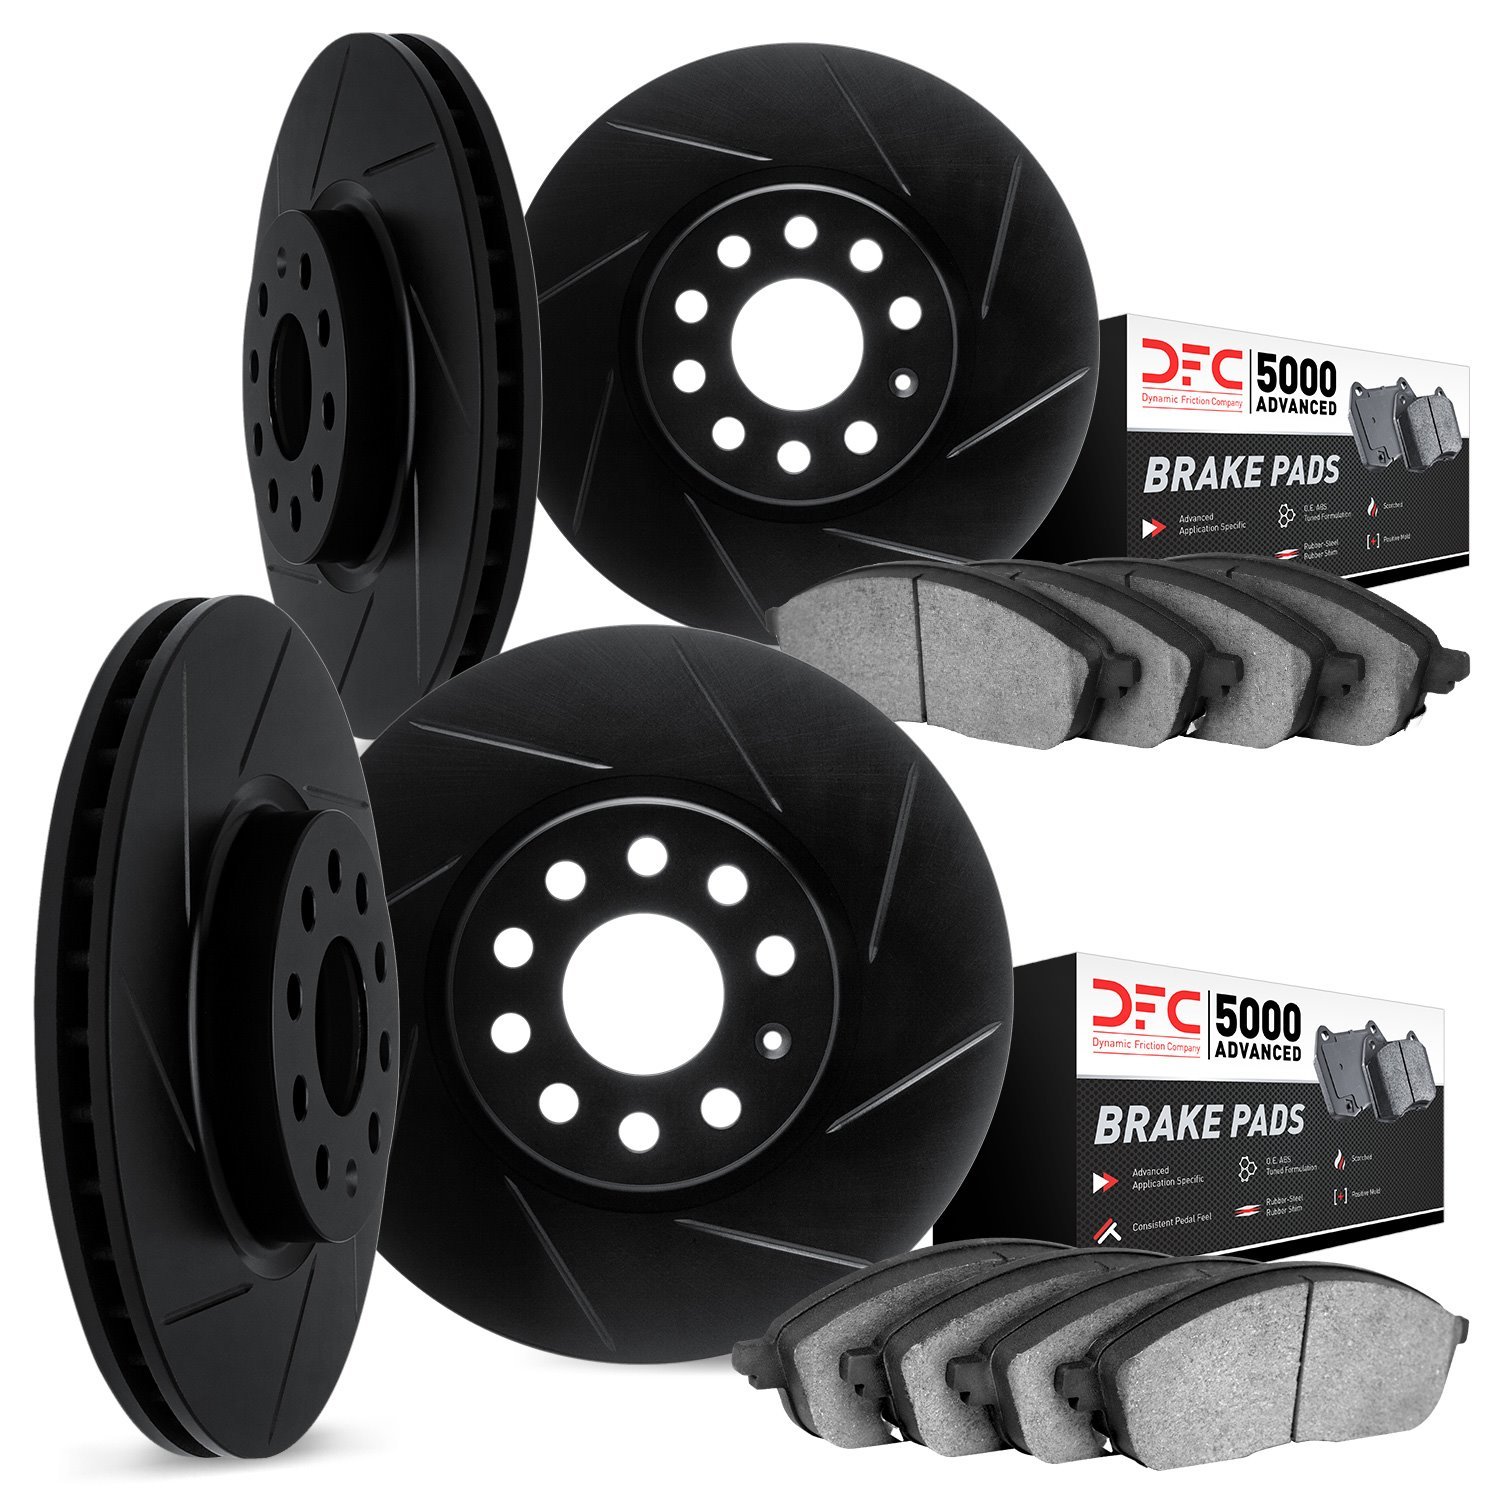 3514-42009 Slotted Brake Rotors w/5000 Advanced Brake Pads Kit & Hardware [Black], 2006-2010 Mopar, Position: Front and Rear